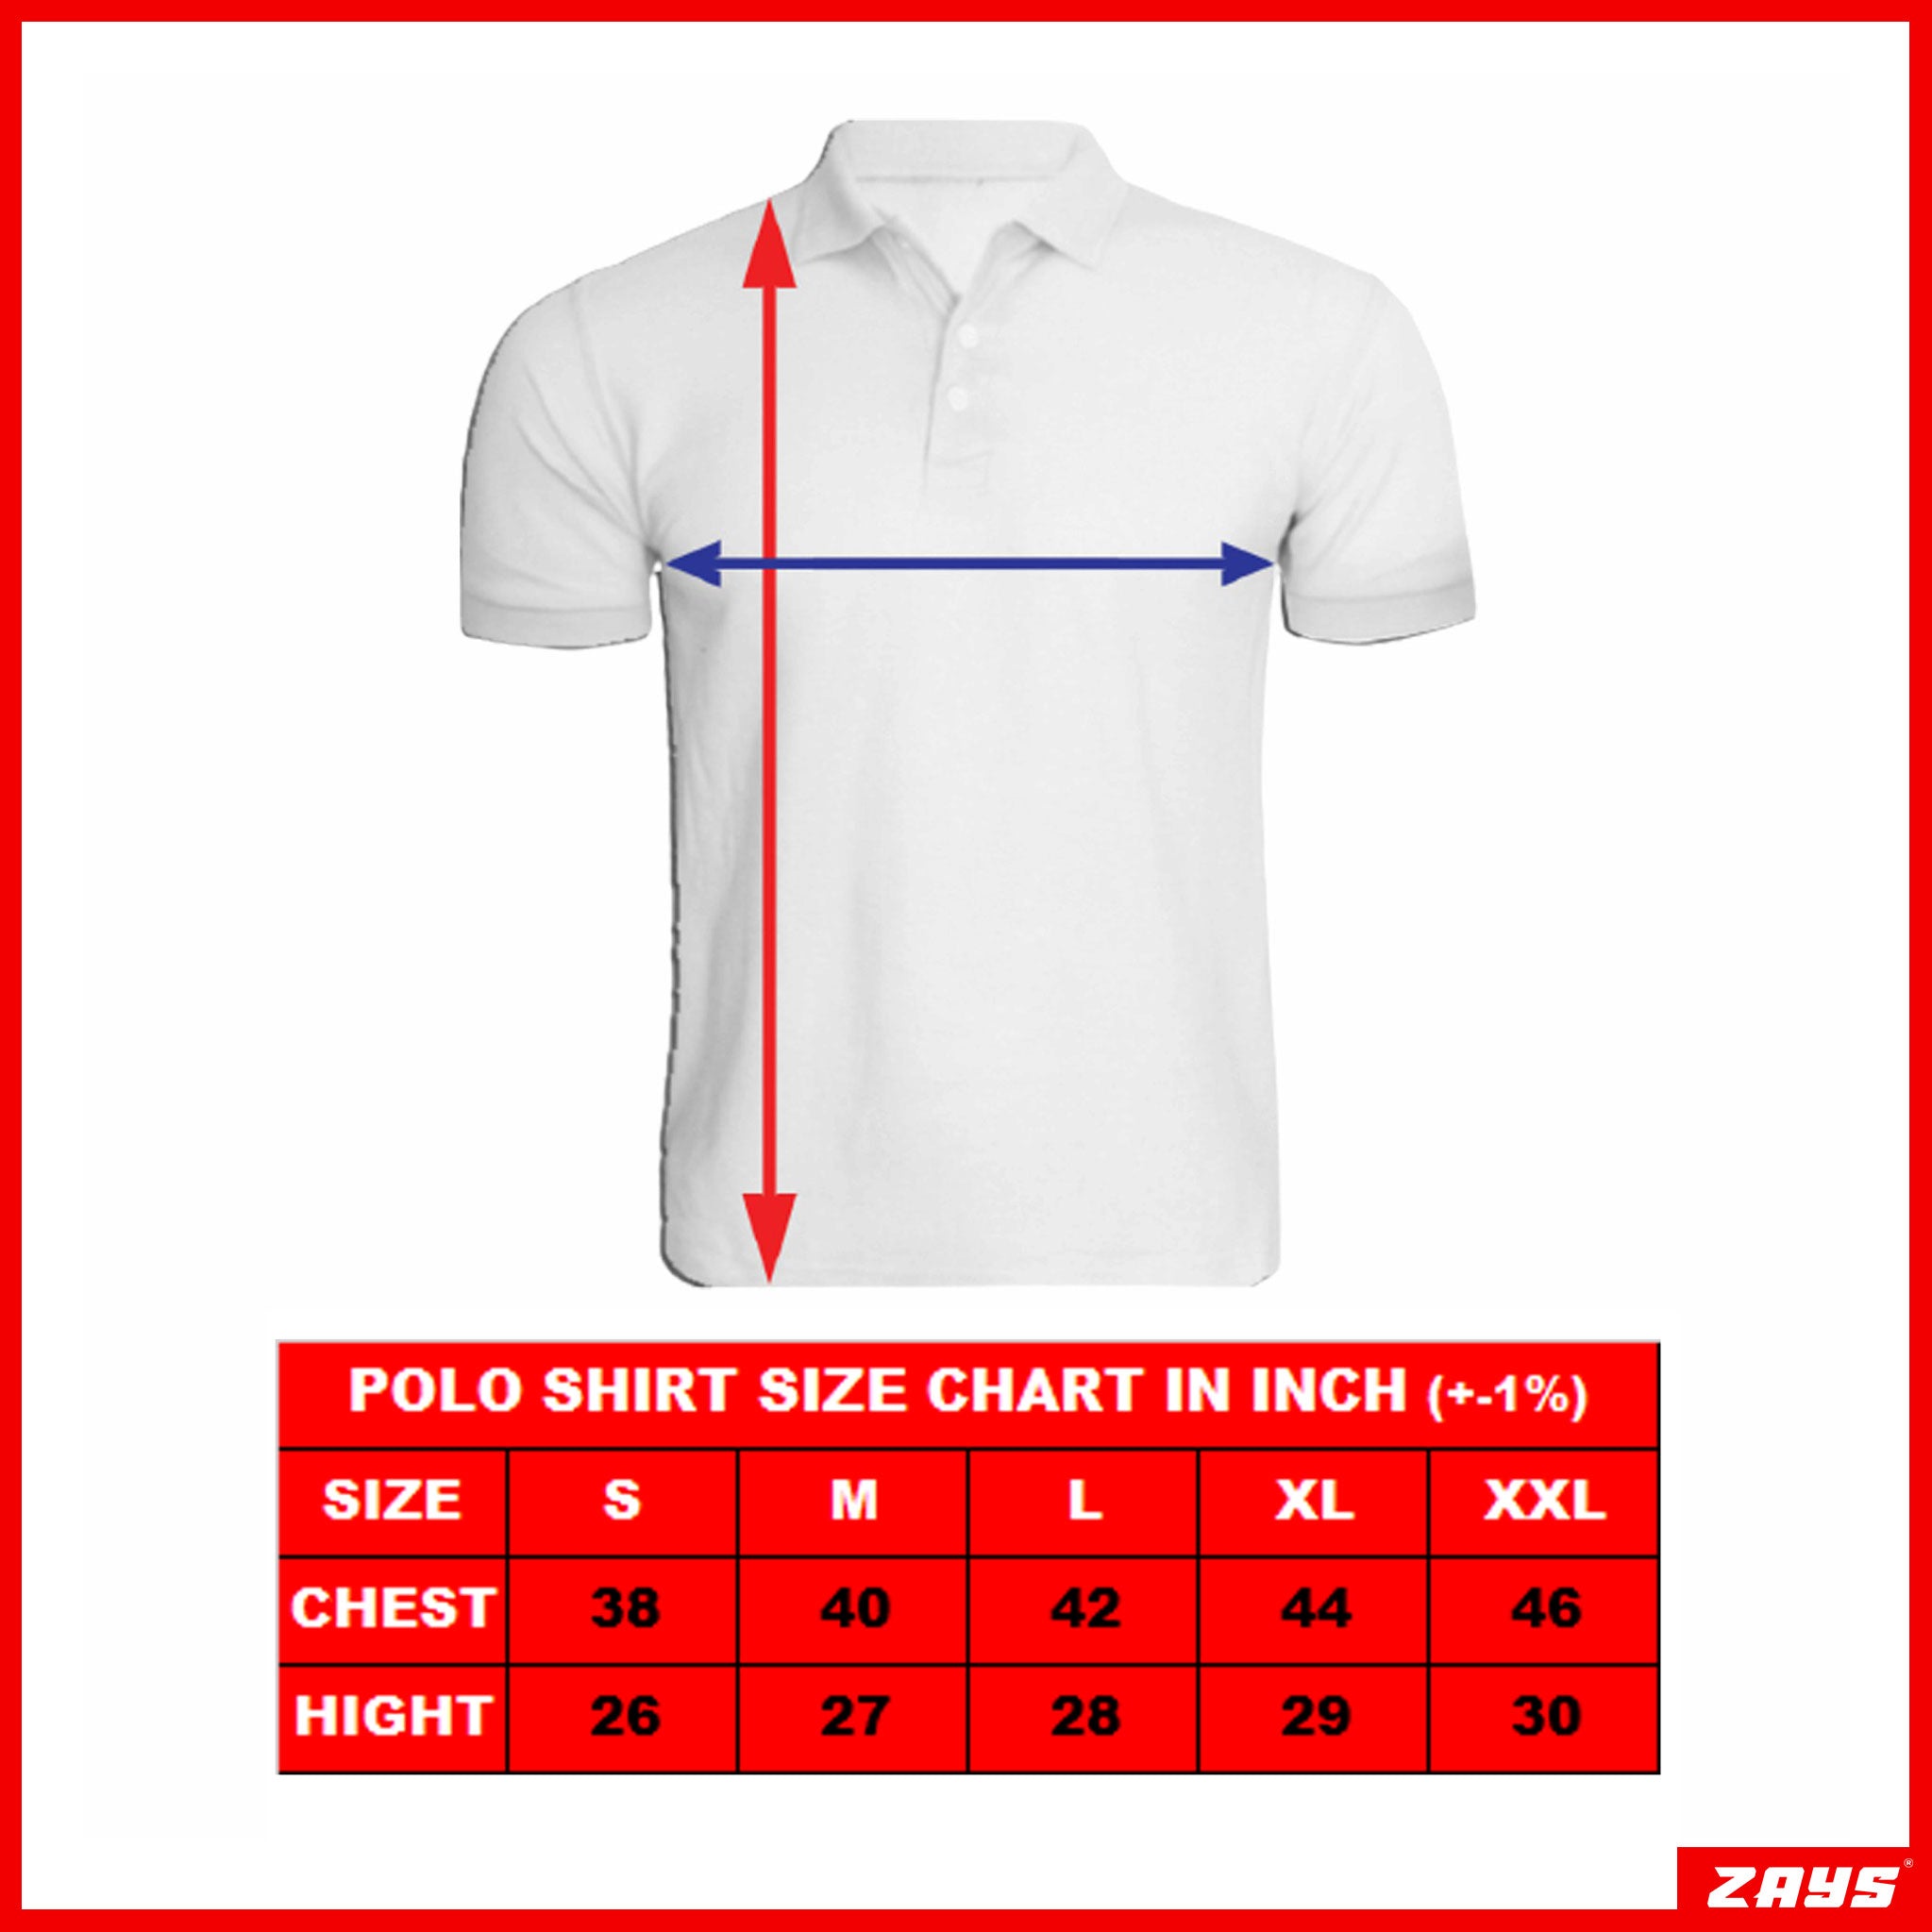 Imported Super Premium Cotton Polo Shirt For Men (ZFERRARI03) - Blue